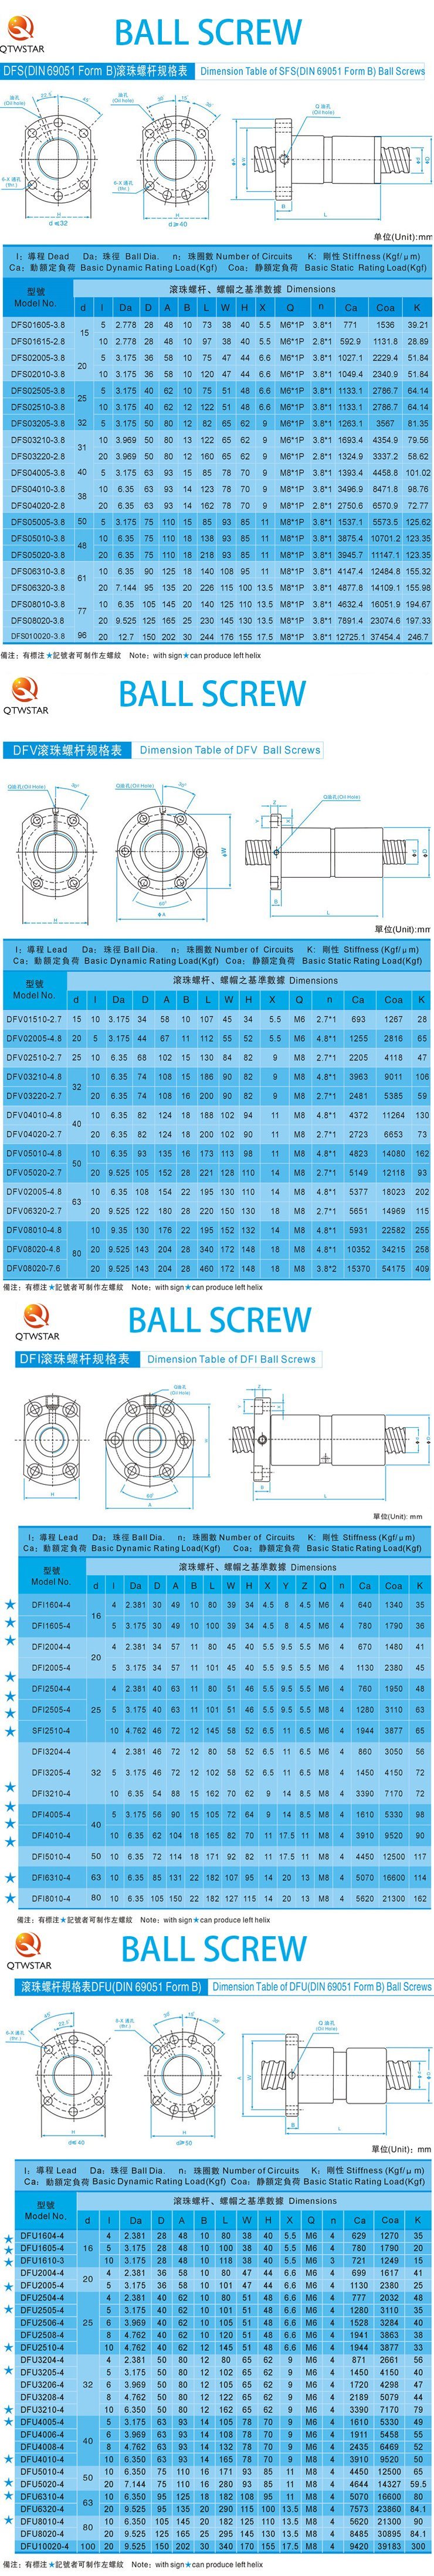 Solomon Islands Ball Screw and Ball Screw, Ball Screw, Shenzhen Ball Screw